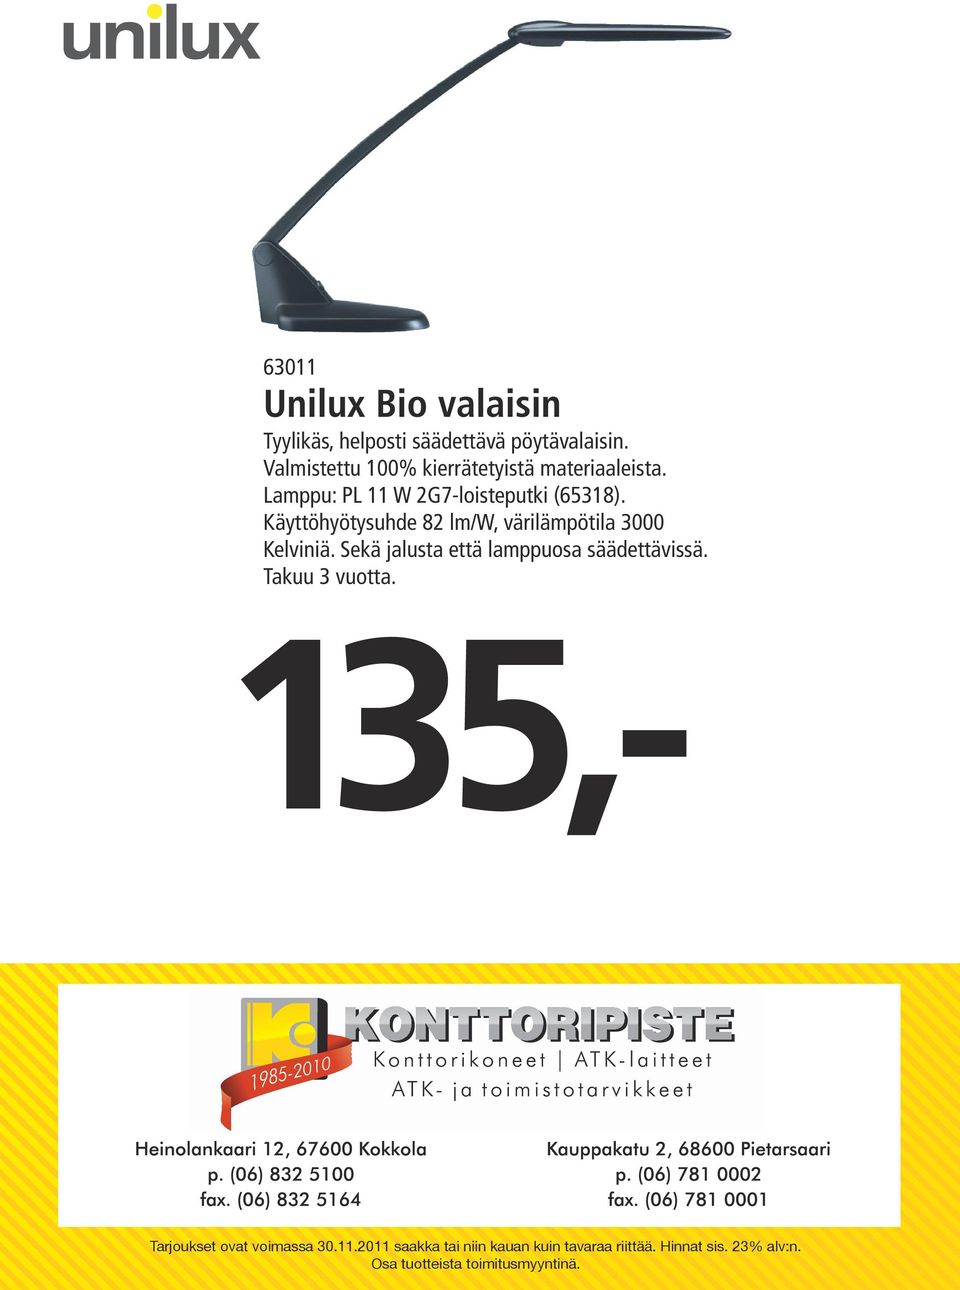 Lamppu: PL 11 W 2G7-loisteputki (65318).